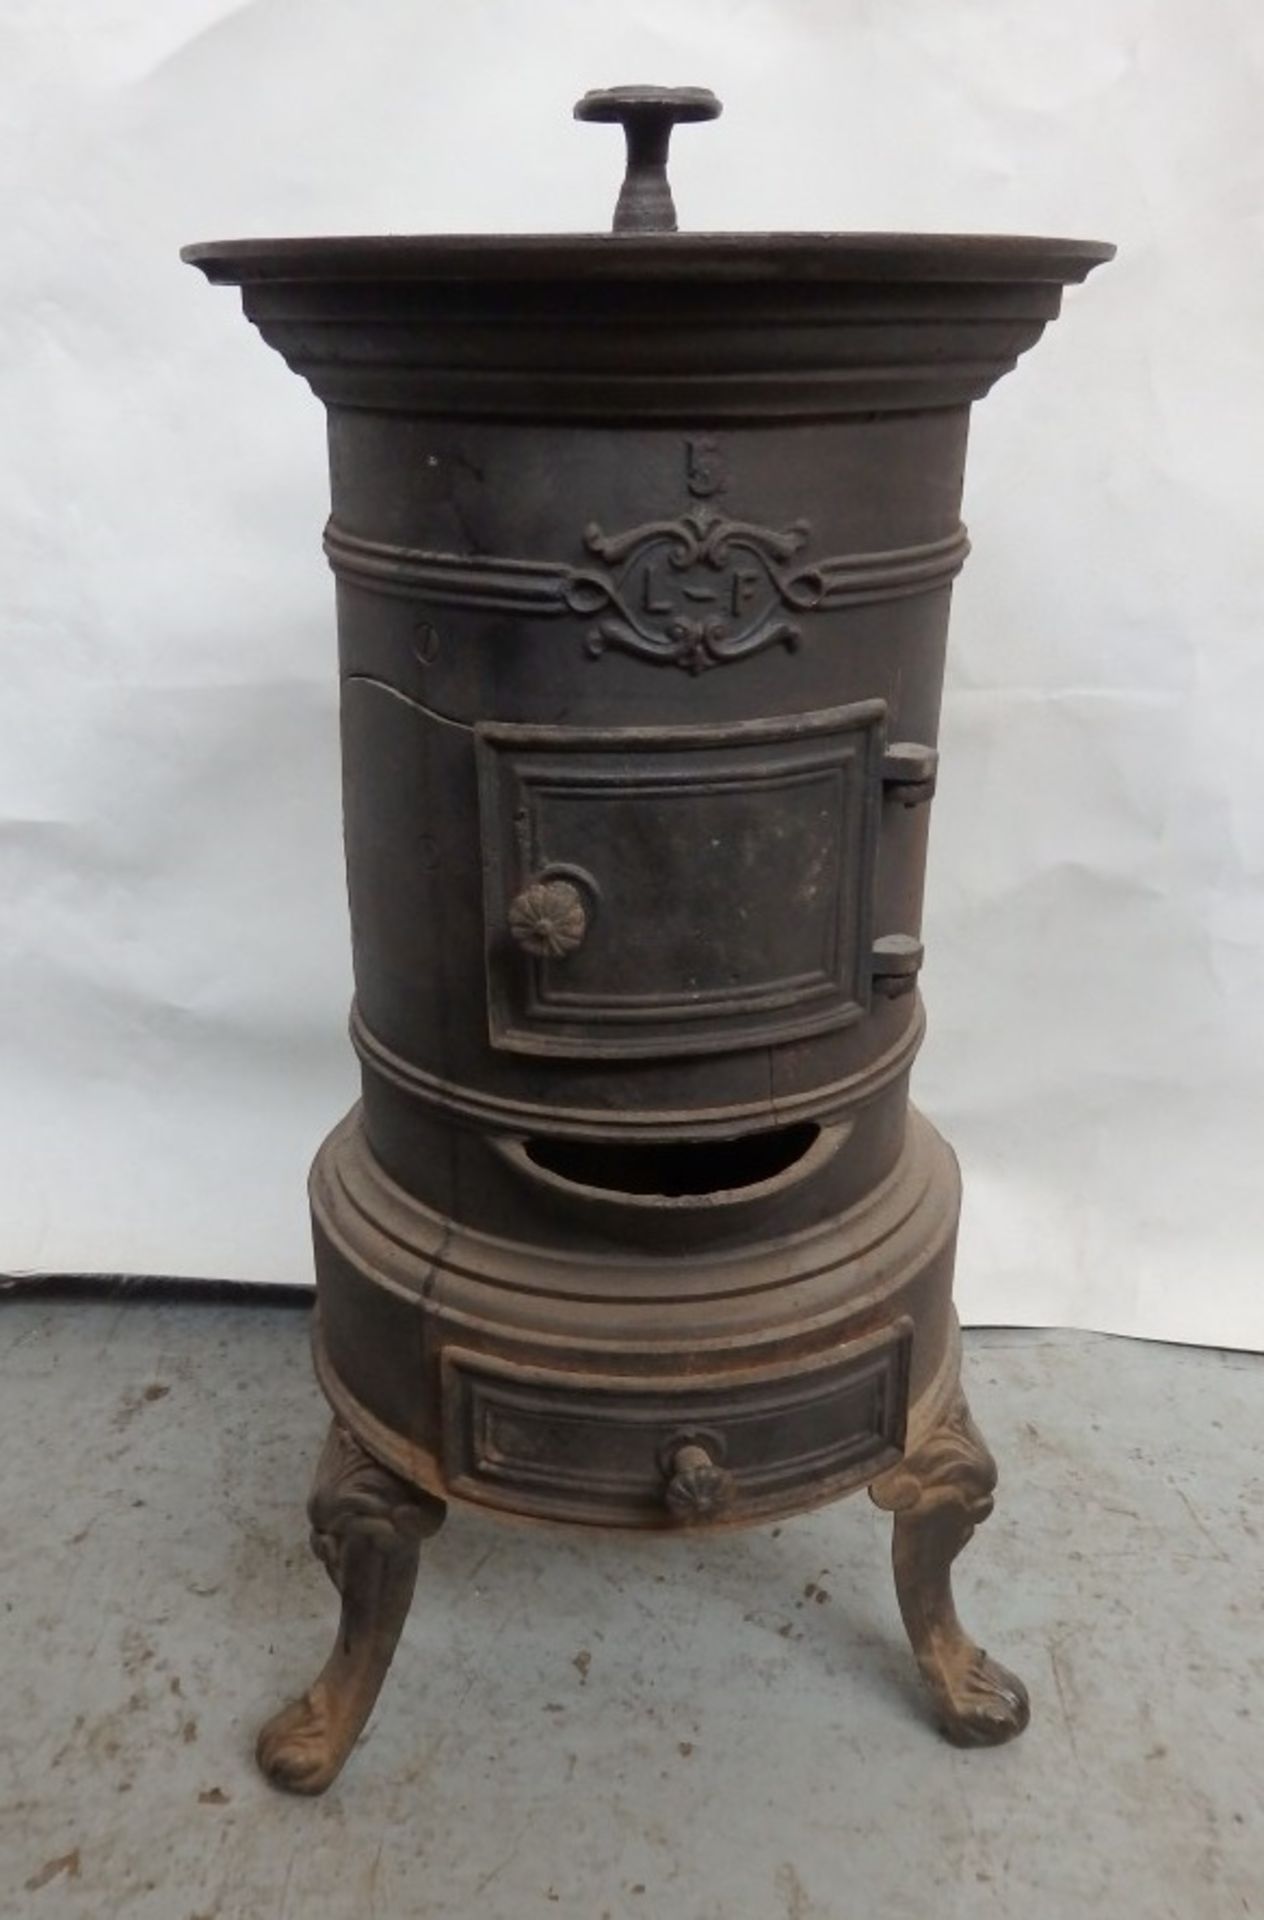 1 x Reclaimed Antique Cast Iron Potbelly Wood Burner / Stove - Dimensions: H61, Diameter 30cm - Ref - Image 17 of 18